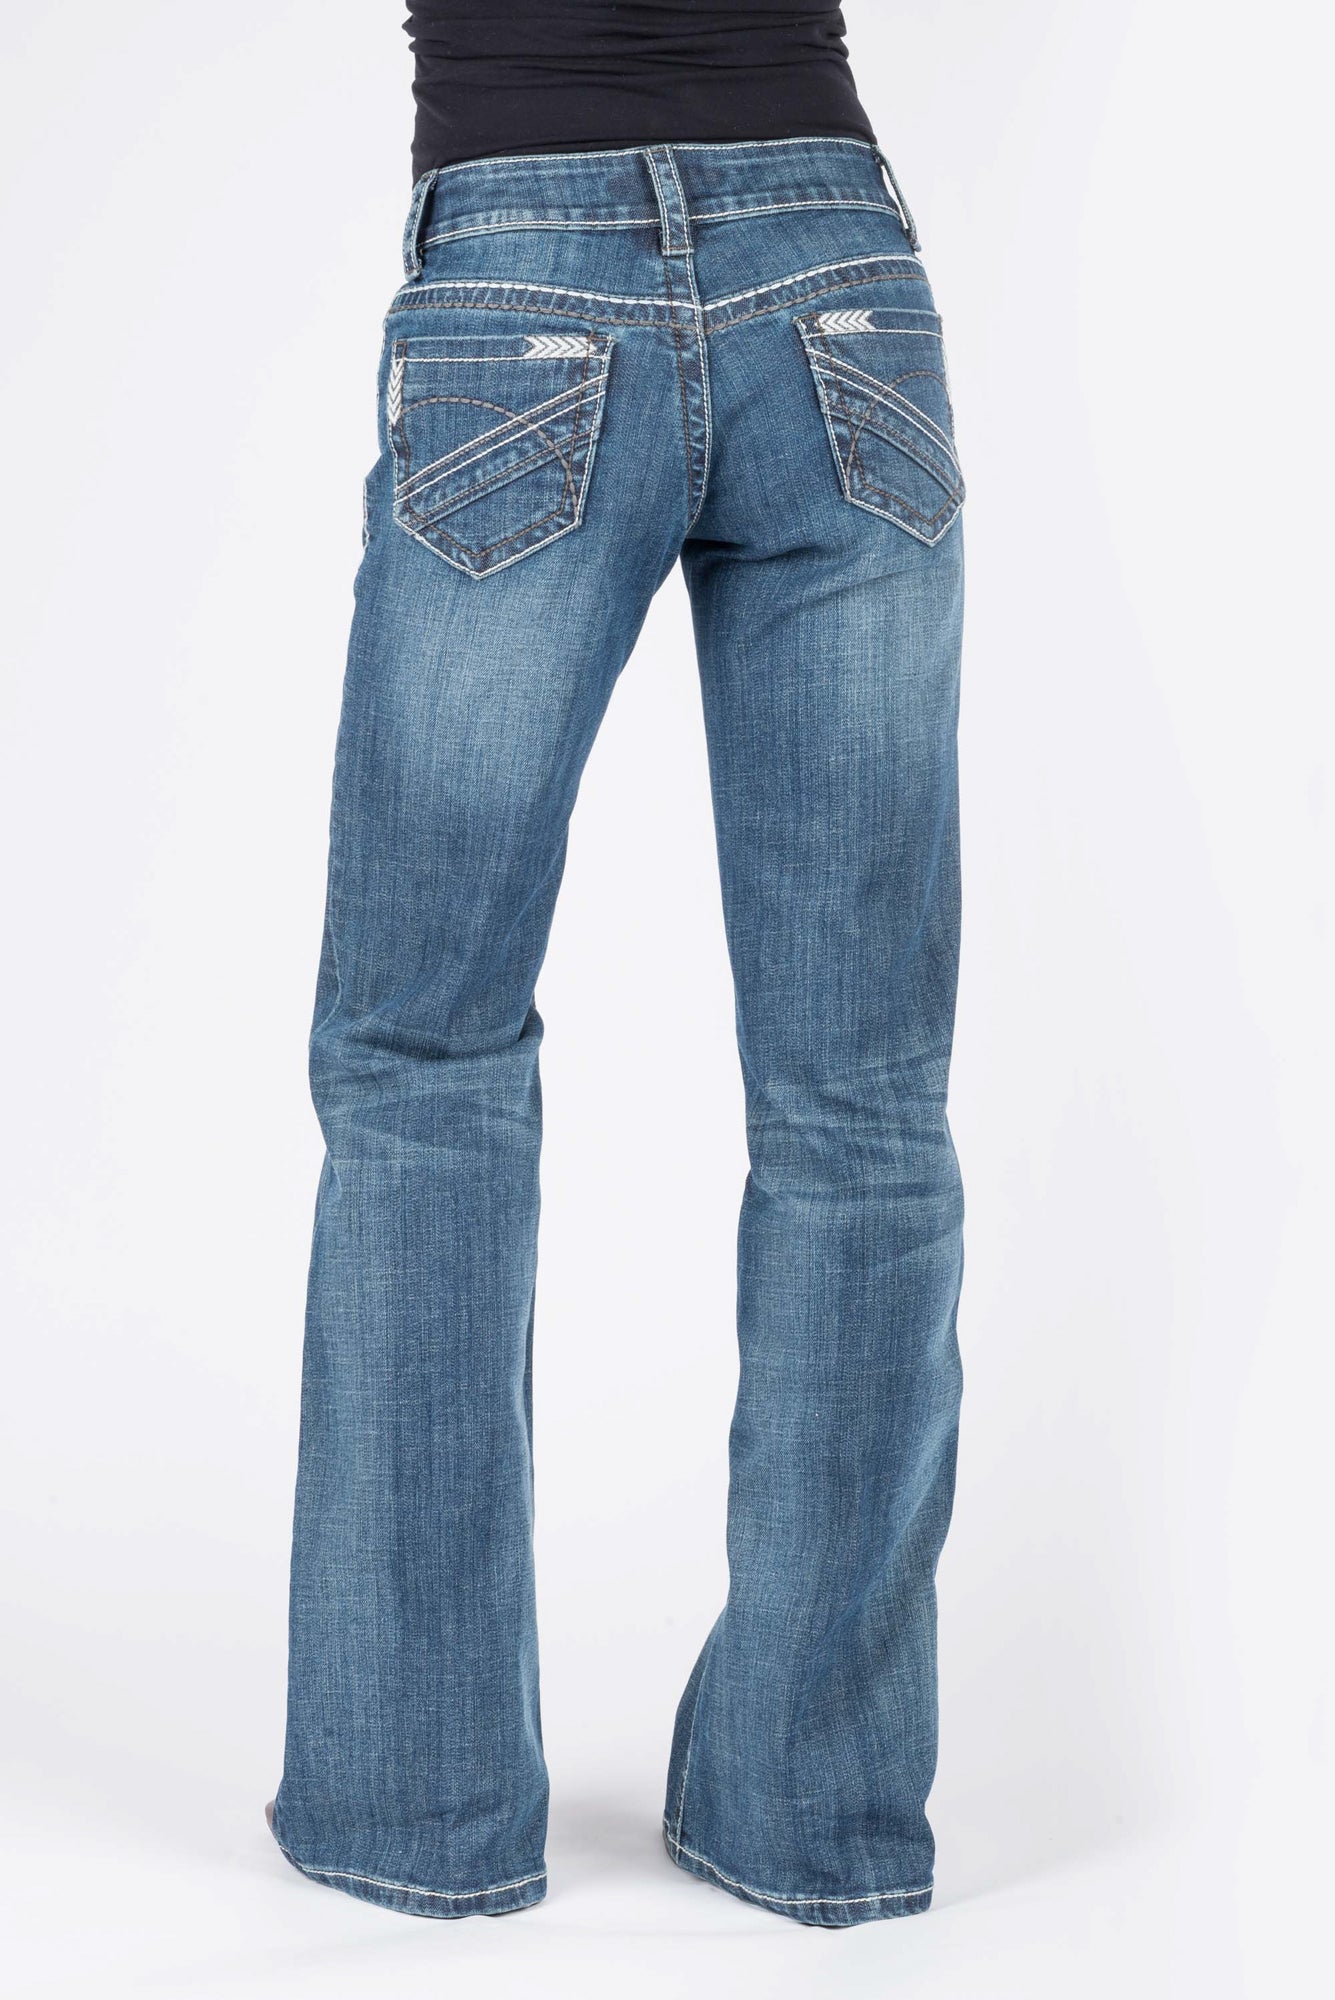 Stetson Womens Blue Cotton Blend Grey Chevron Jeans – The Western Company